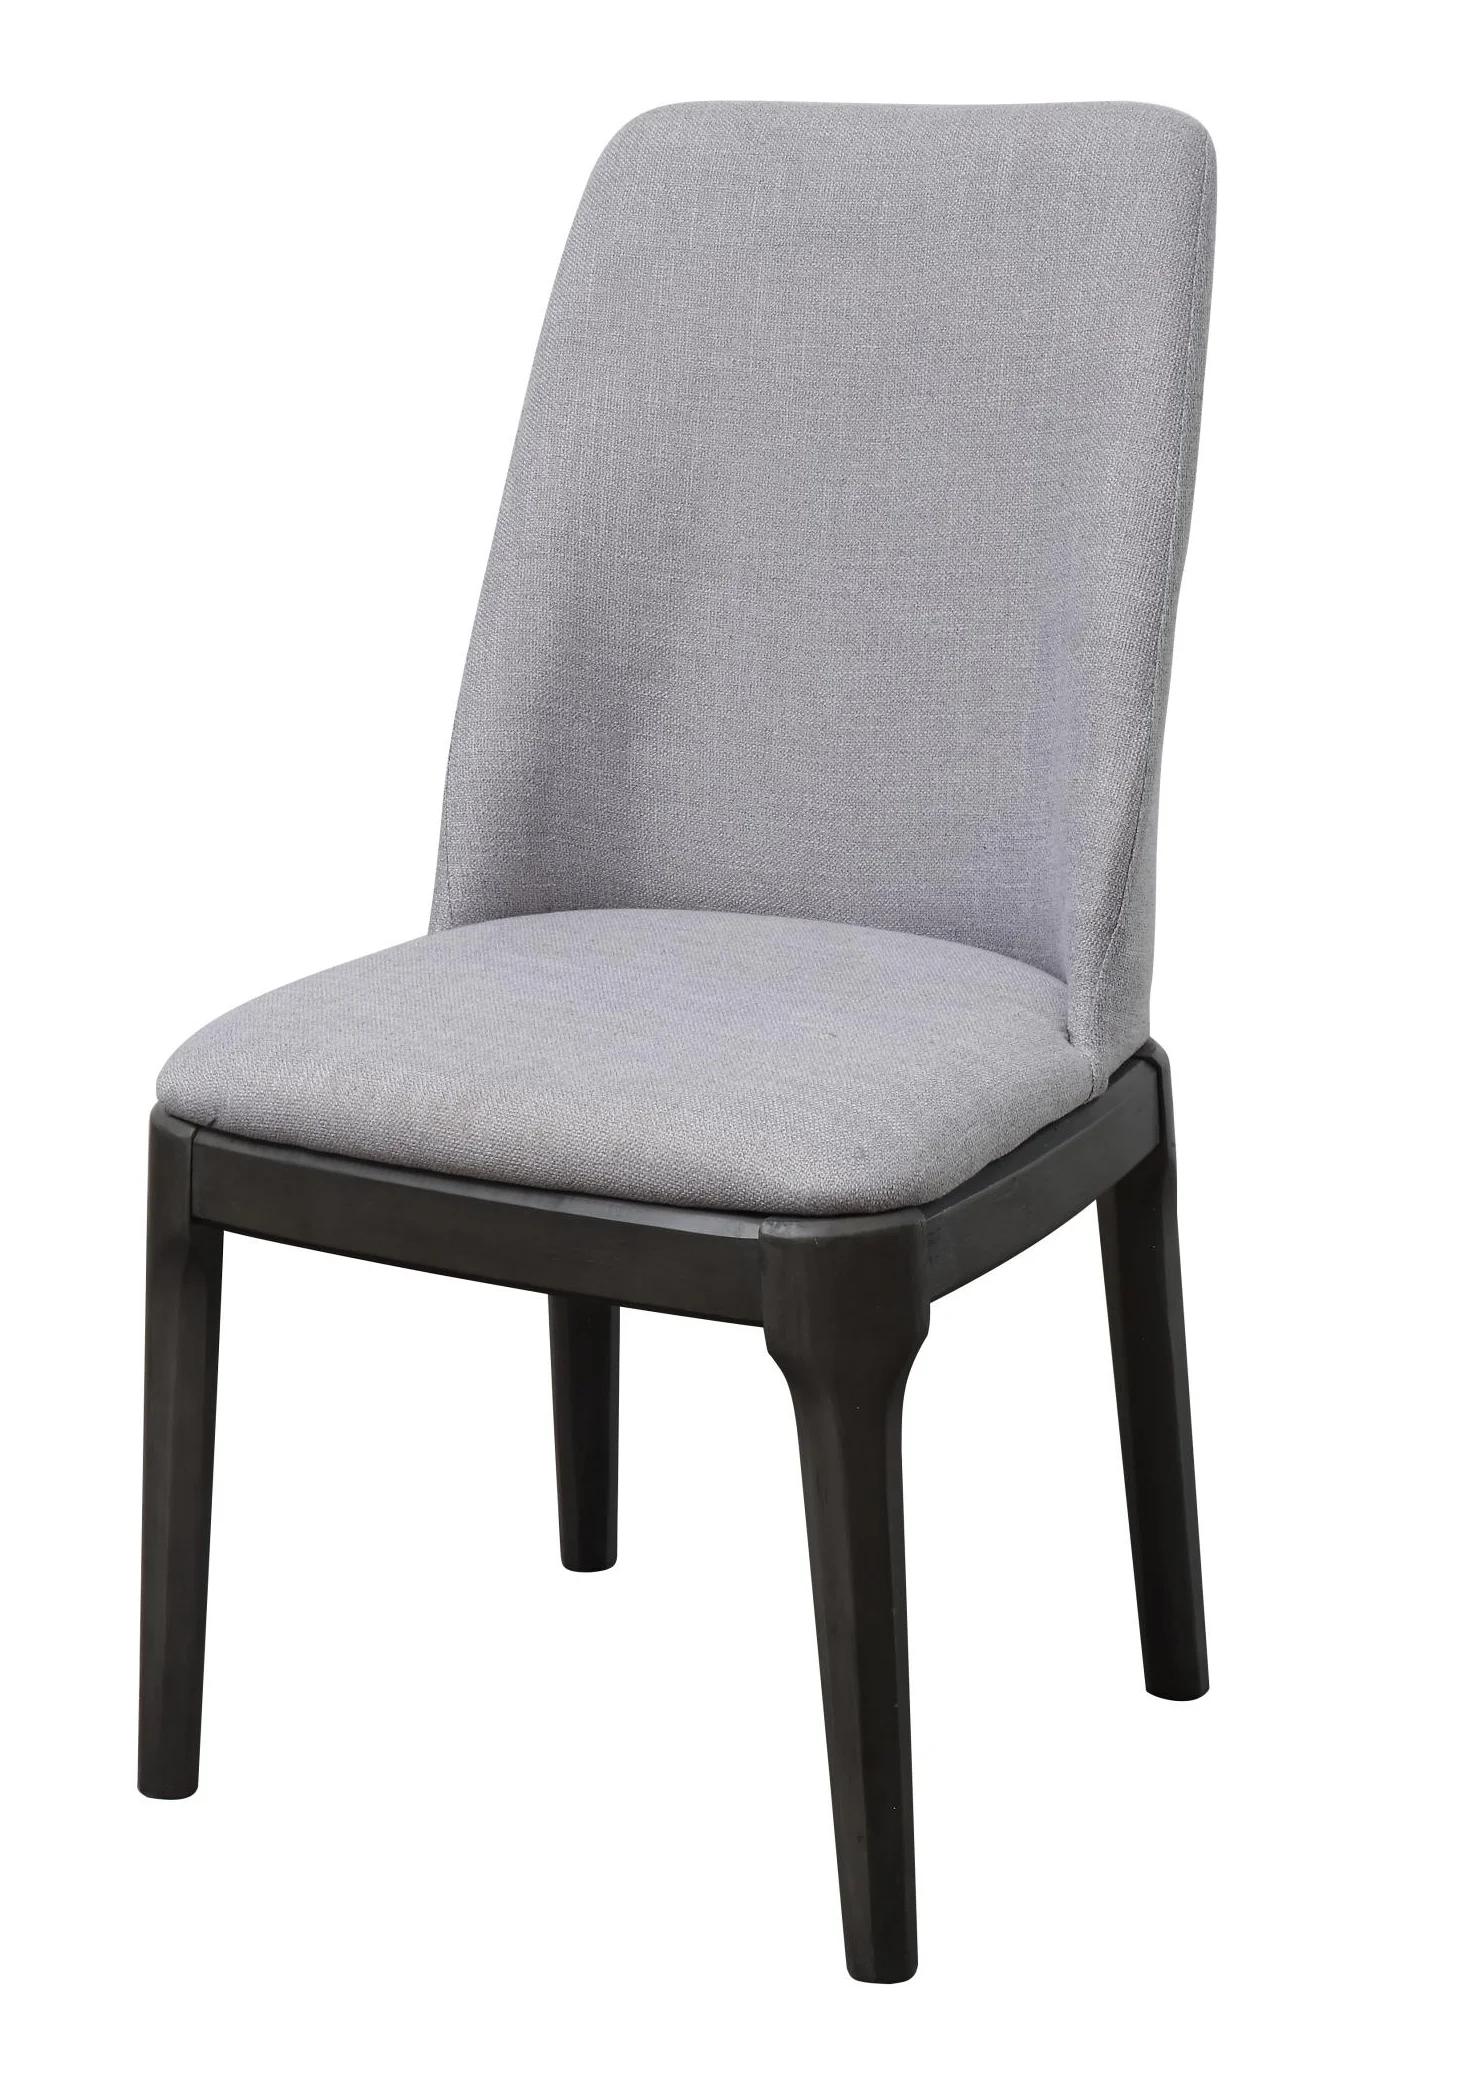 Modern Dining Chair Set Madan 73172-2pcs in White, Gray Linen